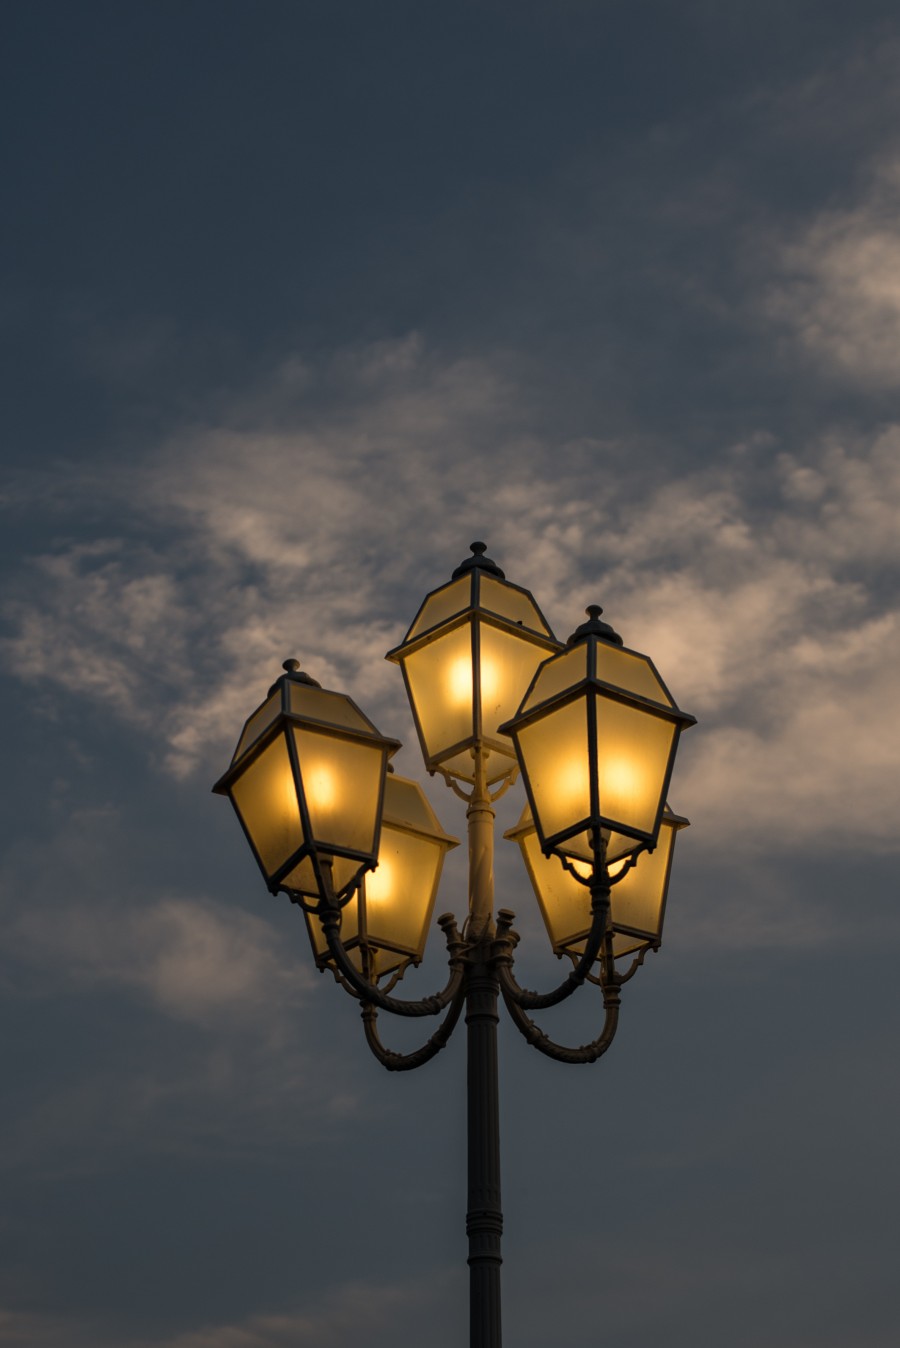 Street lanterns